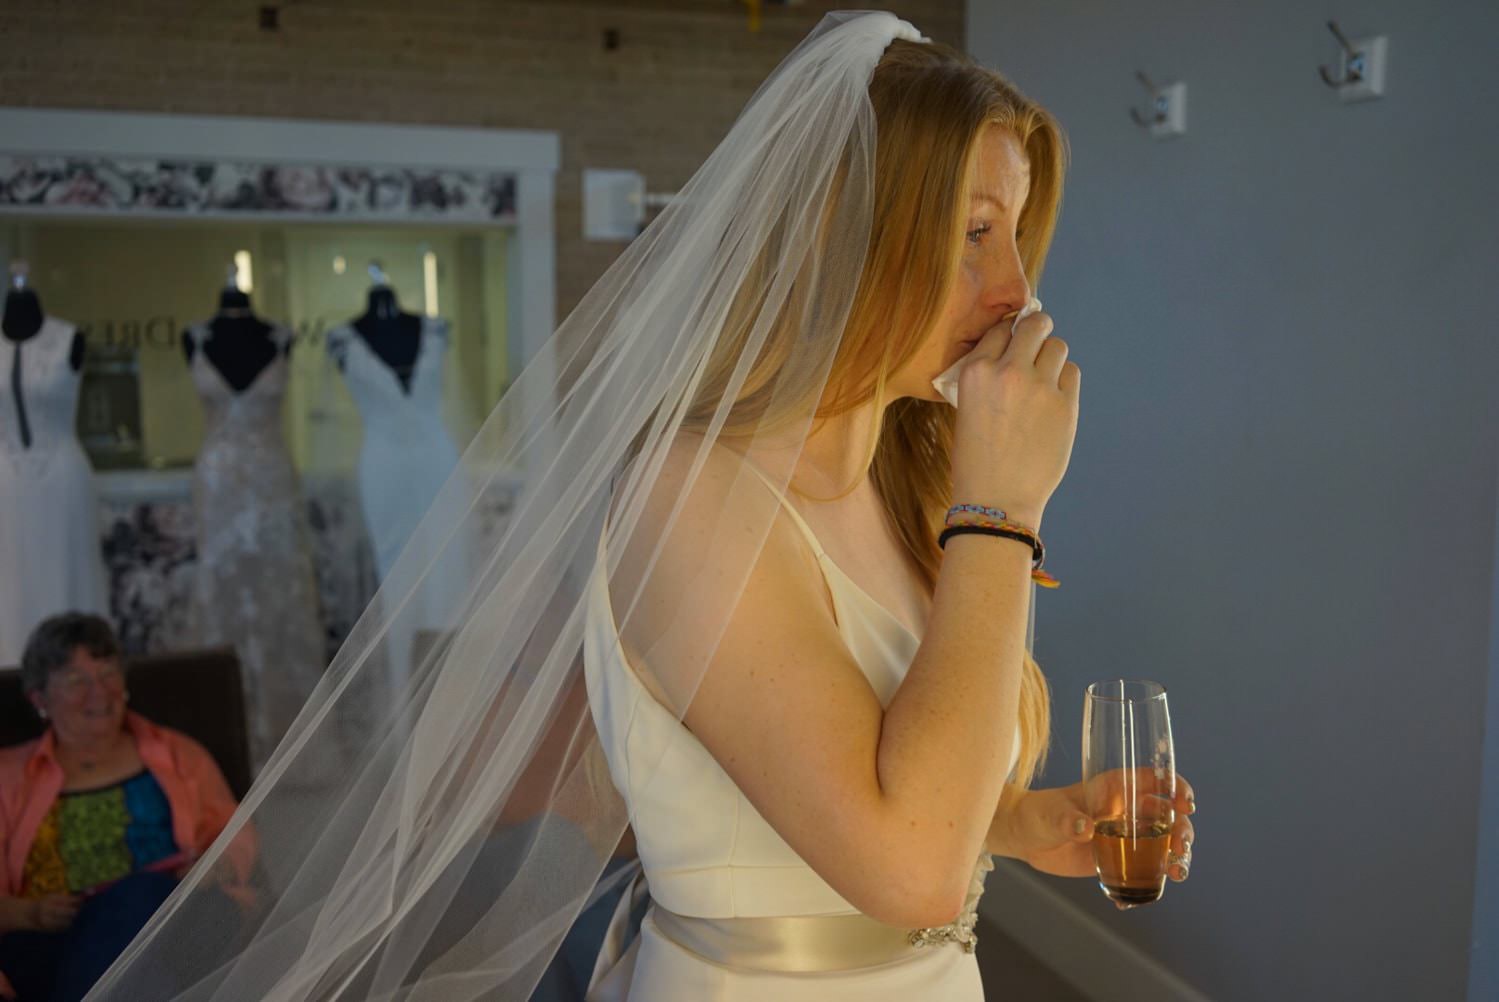 A bride getting emotional trying on wedding dresses.